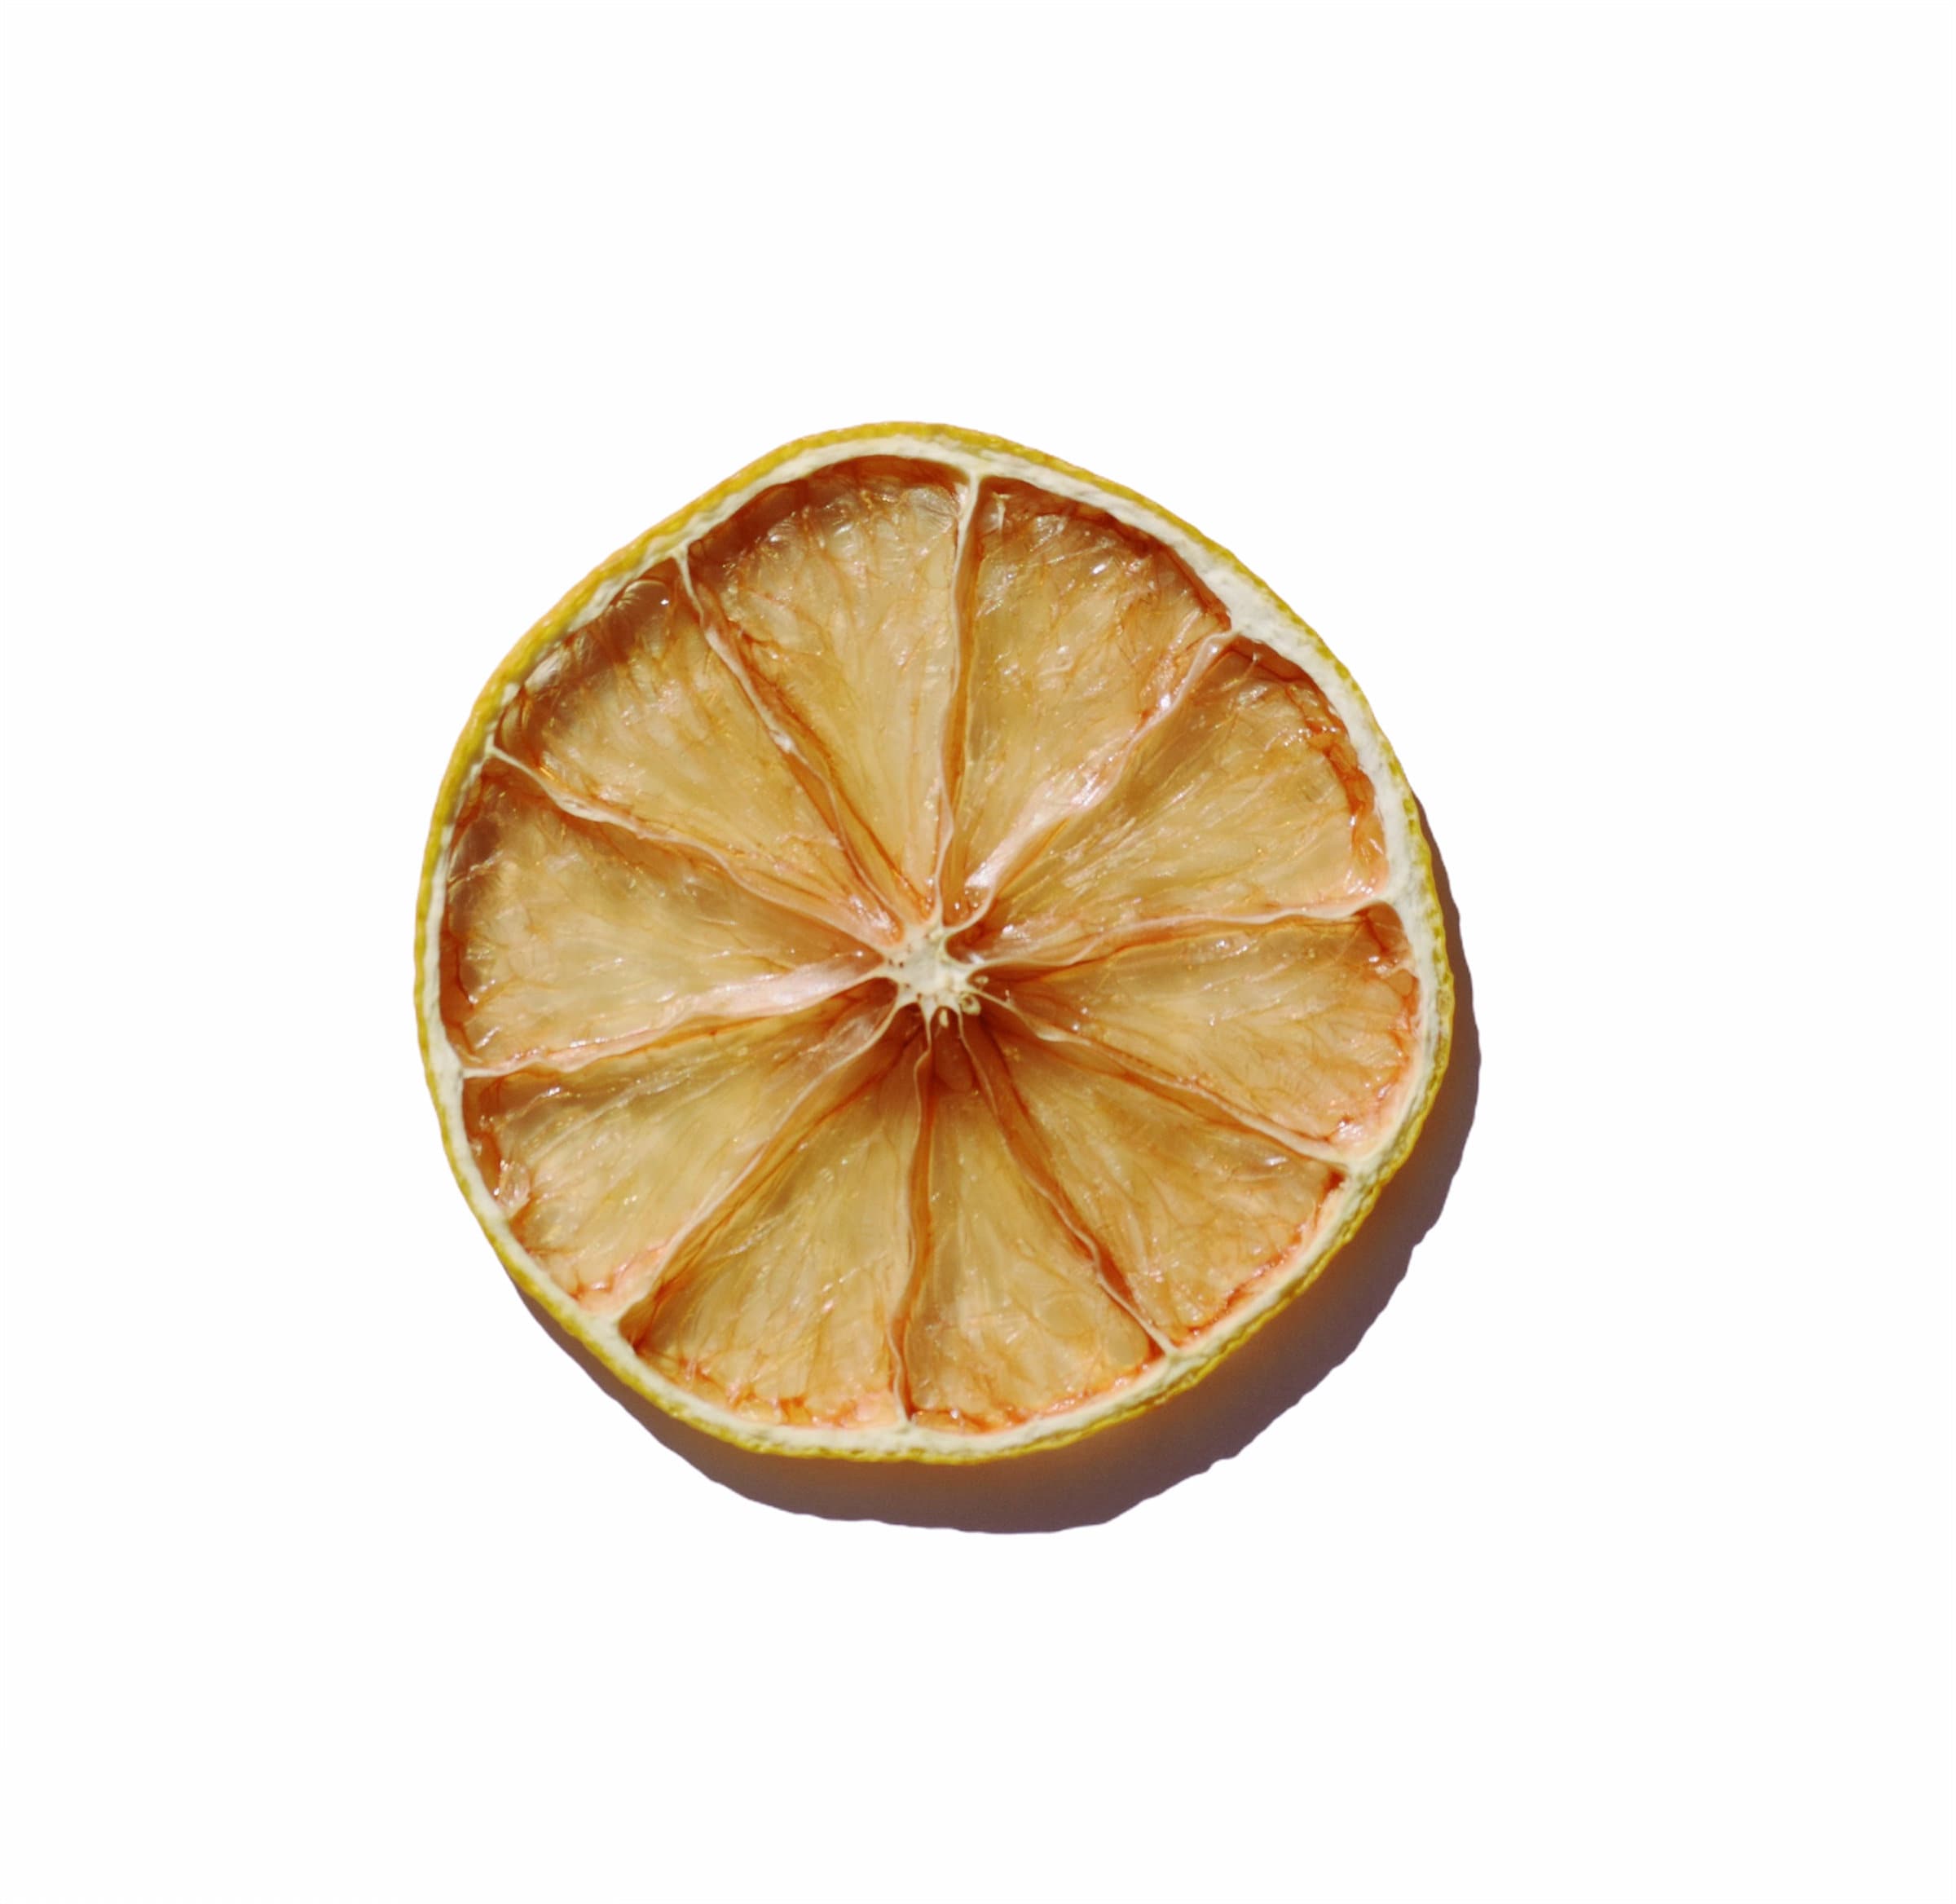 PULLIMORE 10 Pcs Artificial Lemon Slices Plastic Limes Orange Slice Blocks  Simulation Fake Lemon Slices Home Decor (Limes Blocks)